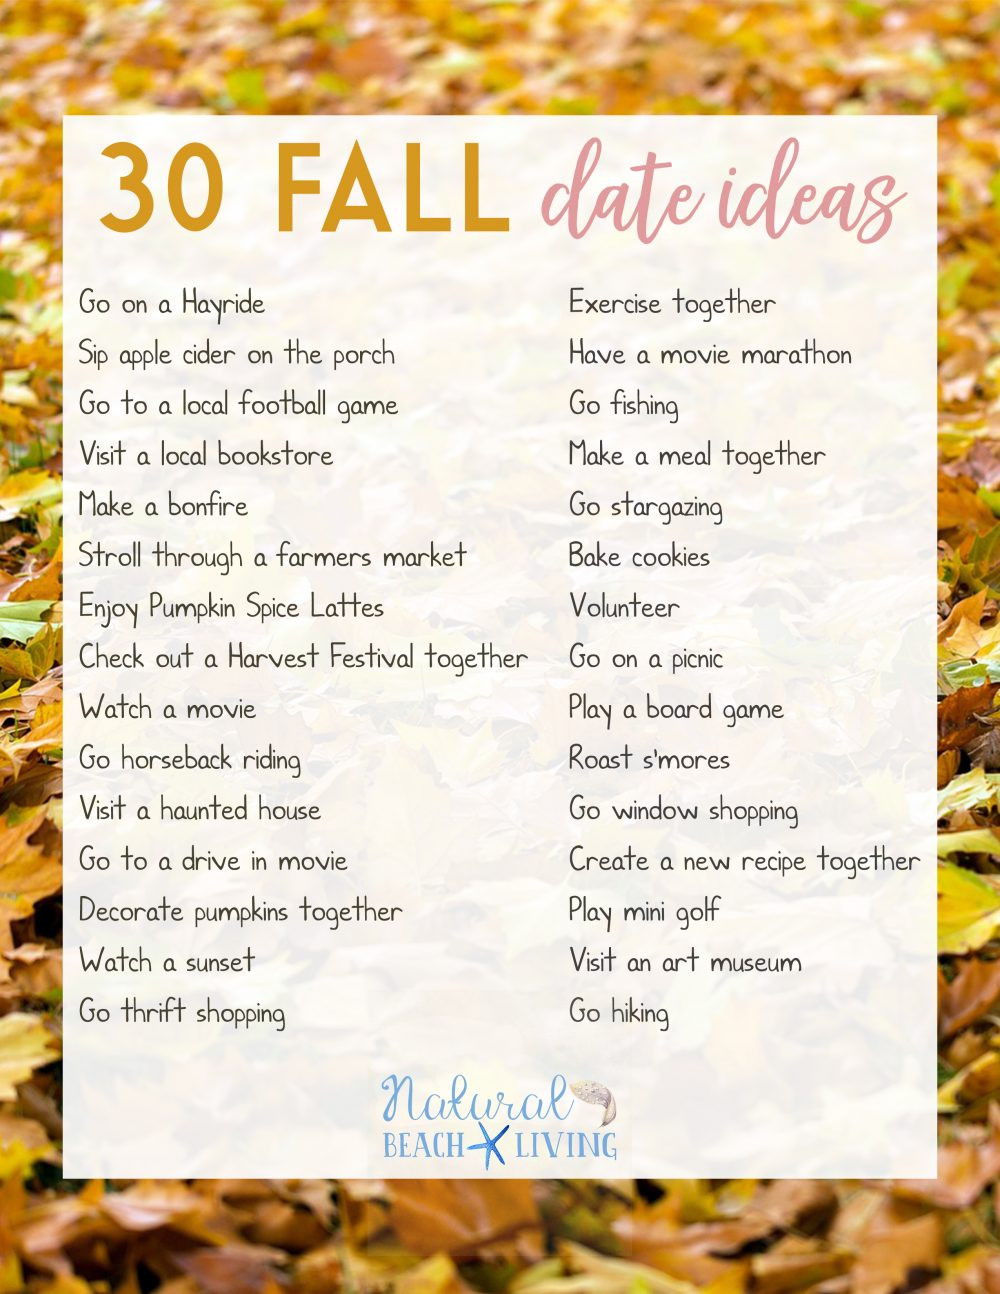 Fall Date Night Ideas
 Fun Date Night Ideas for Fall Natural Beach Living